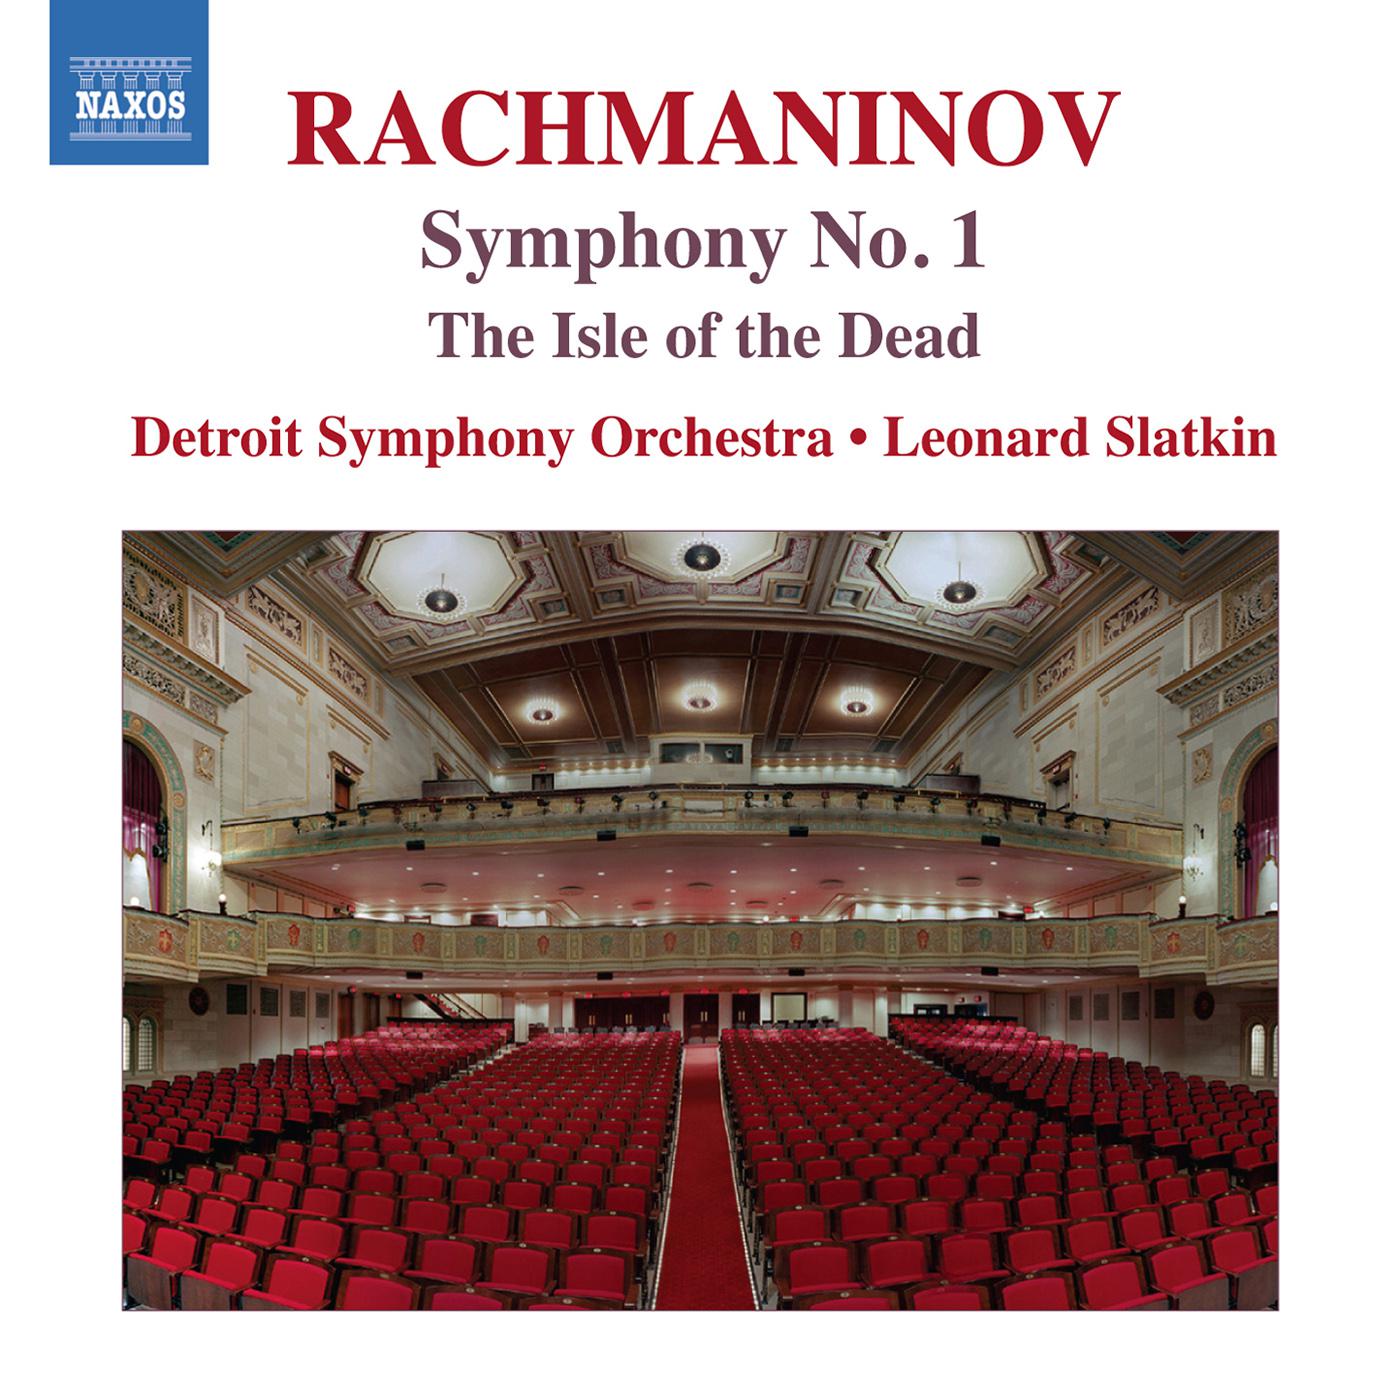 RACHMANINOV, S.: Isle of the Dead (The) / Symphony No. 1 (Detroit Symphony, Slatkin)